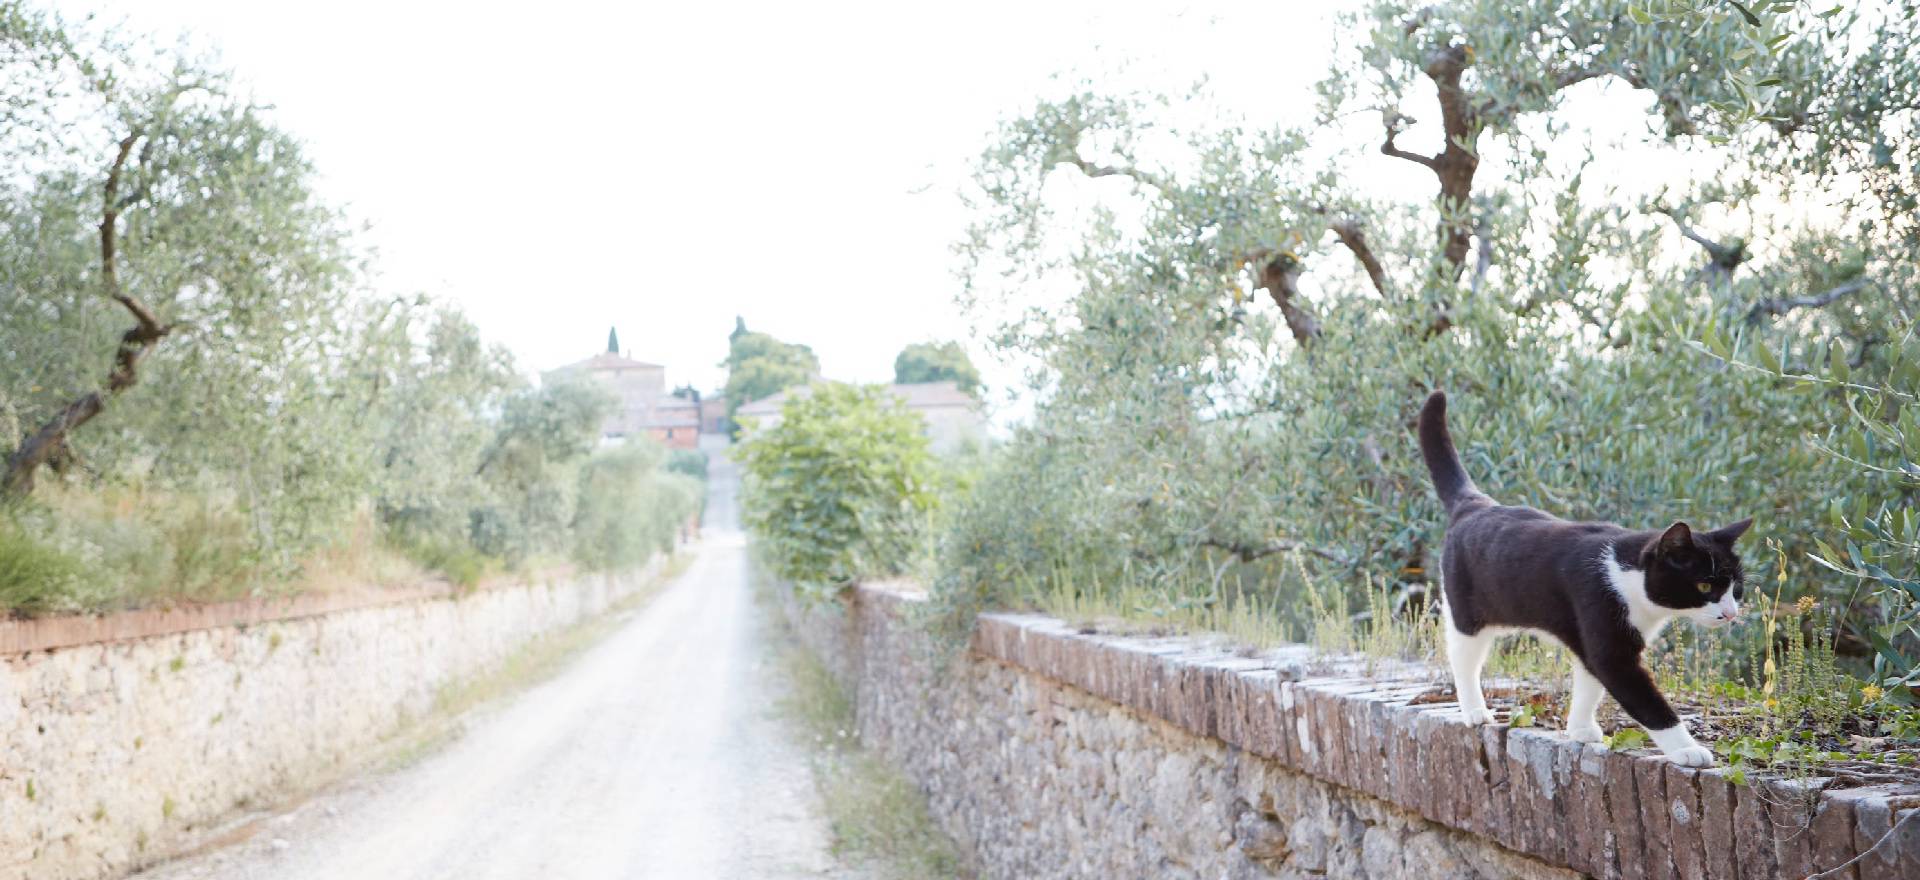 Agriturismo Tuscany Hidden gem in Tuscany near Siena